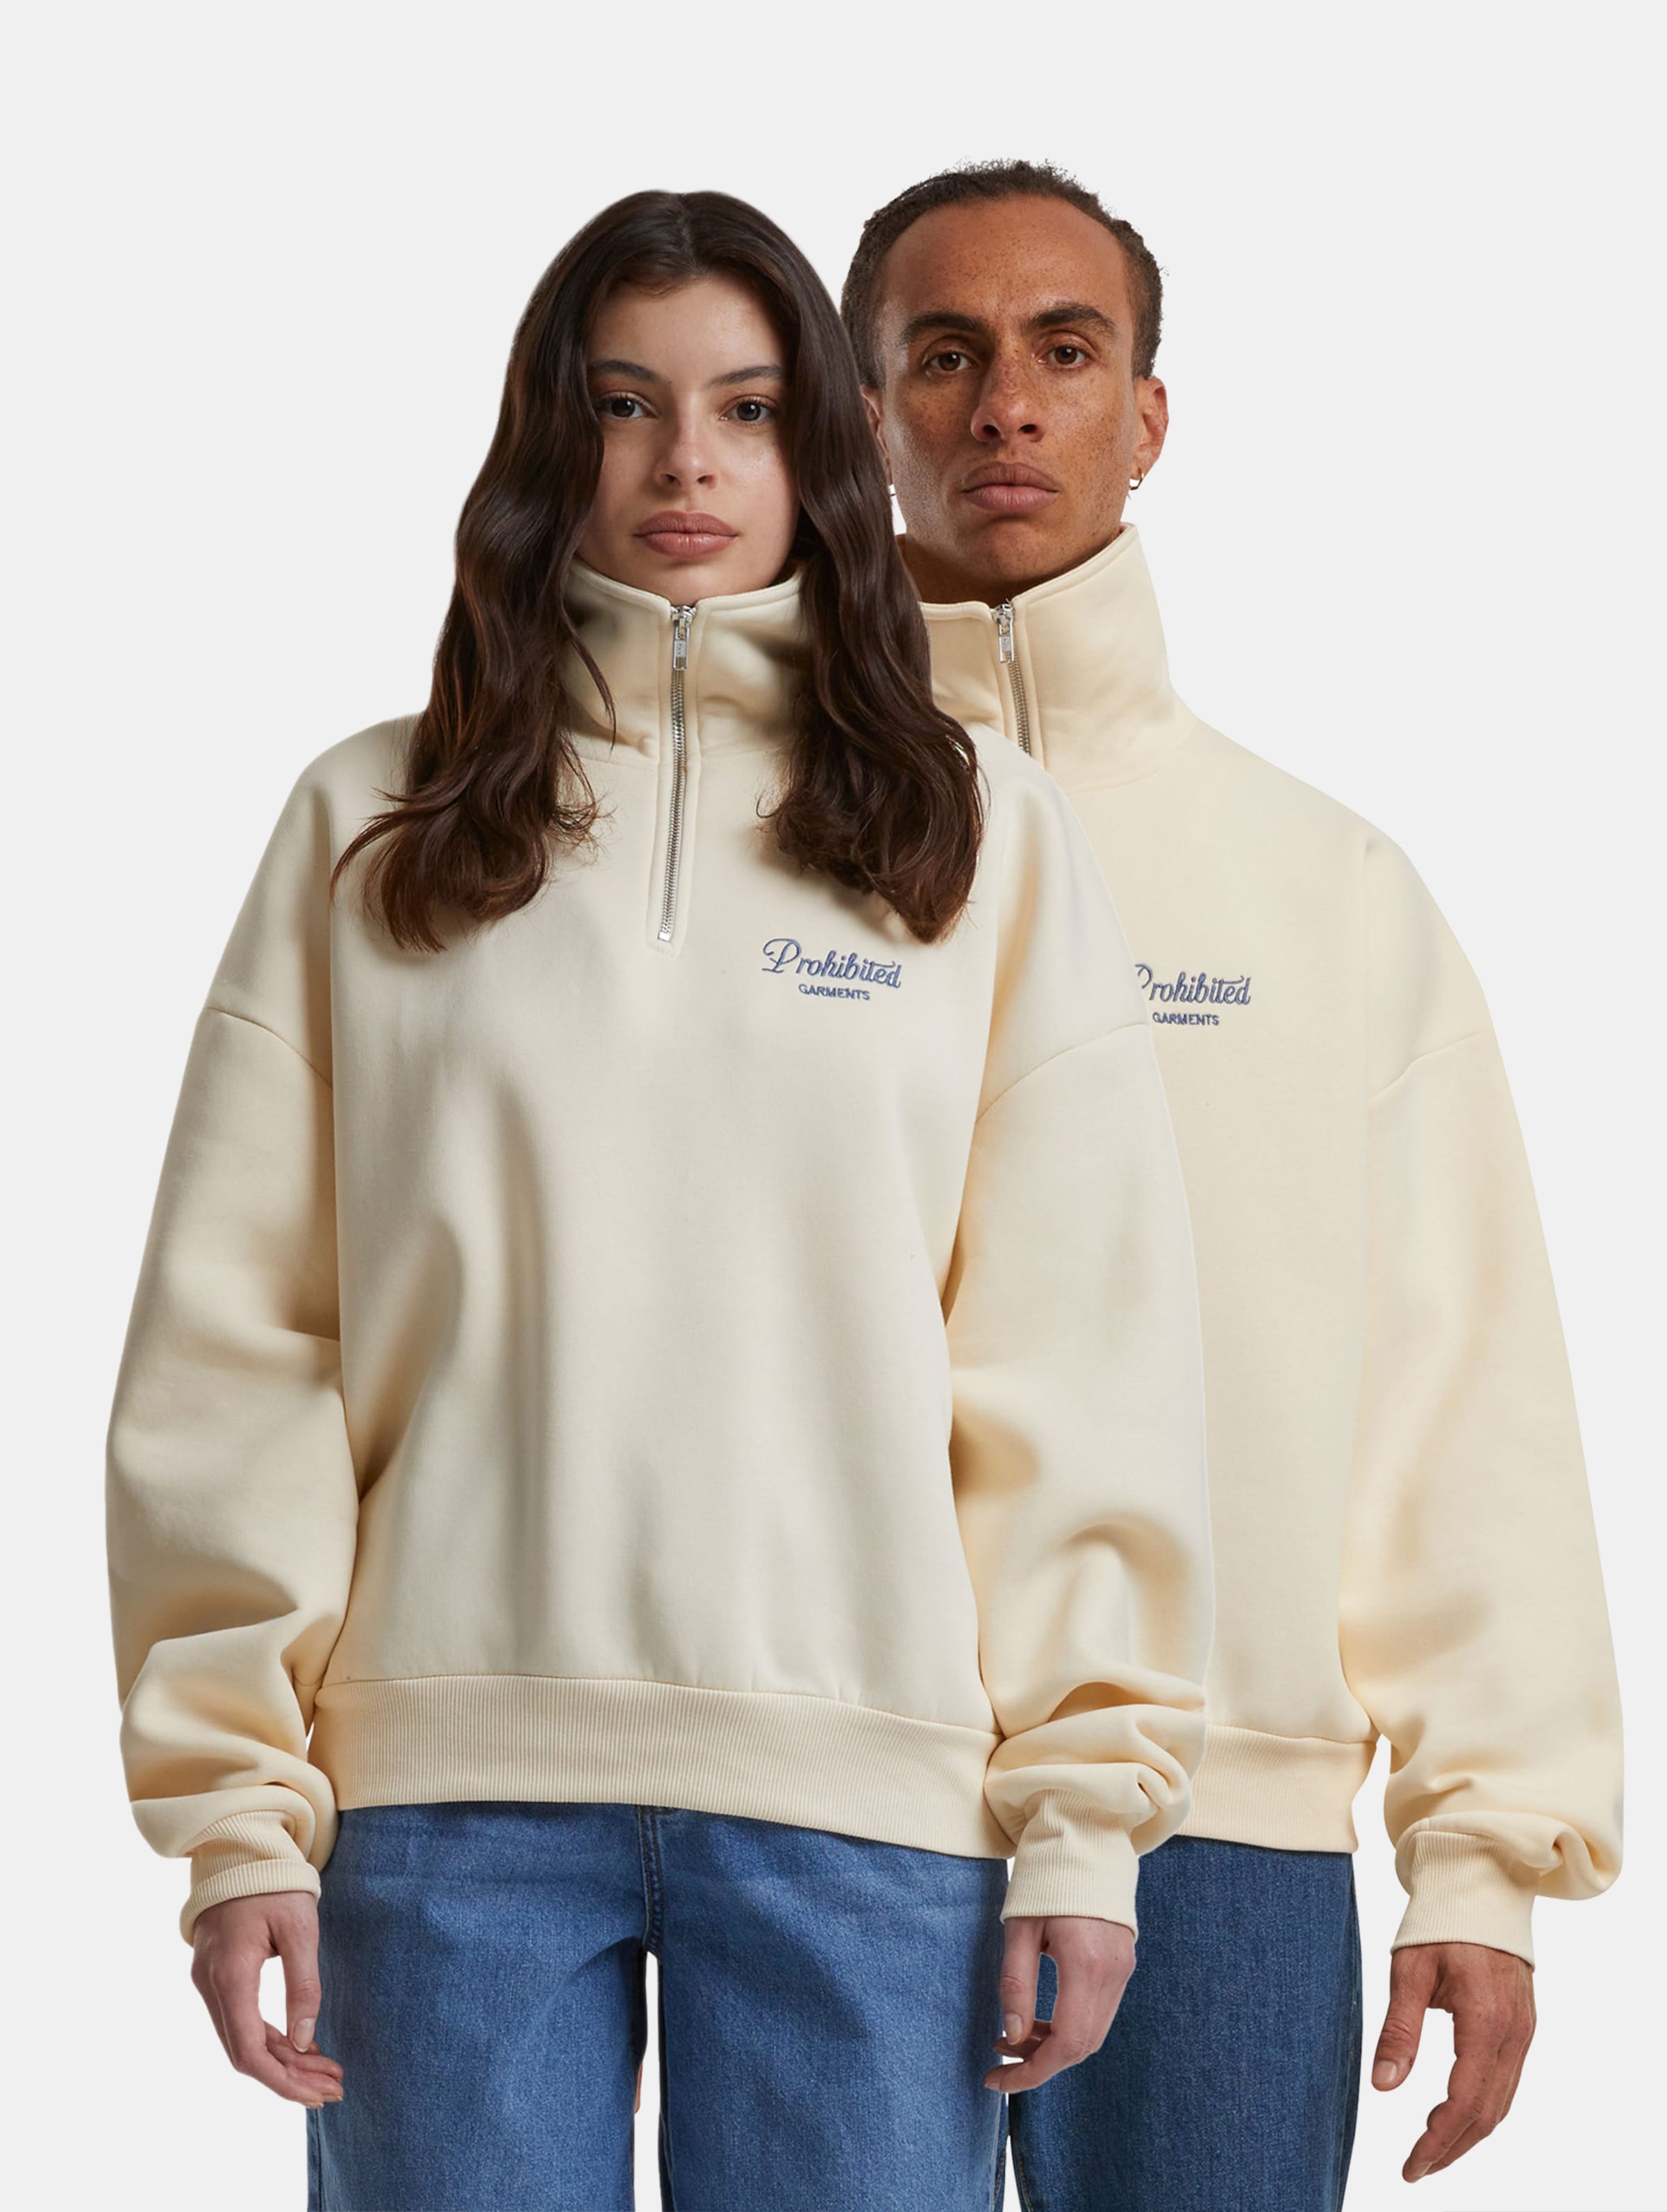 Prohibited PB Garment Half Zip Pullover Frauen,Männer,Unisex op kleur beige, Maat L